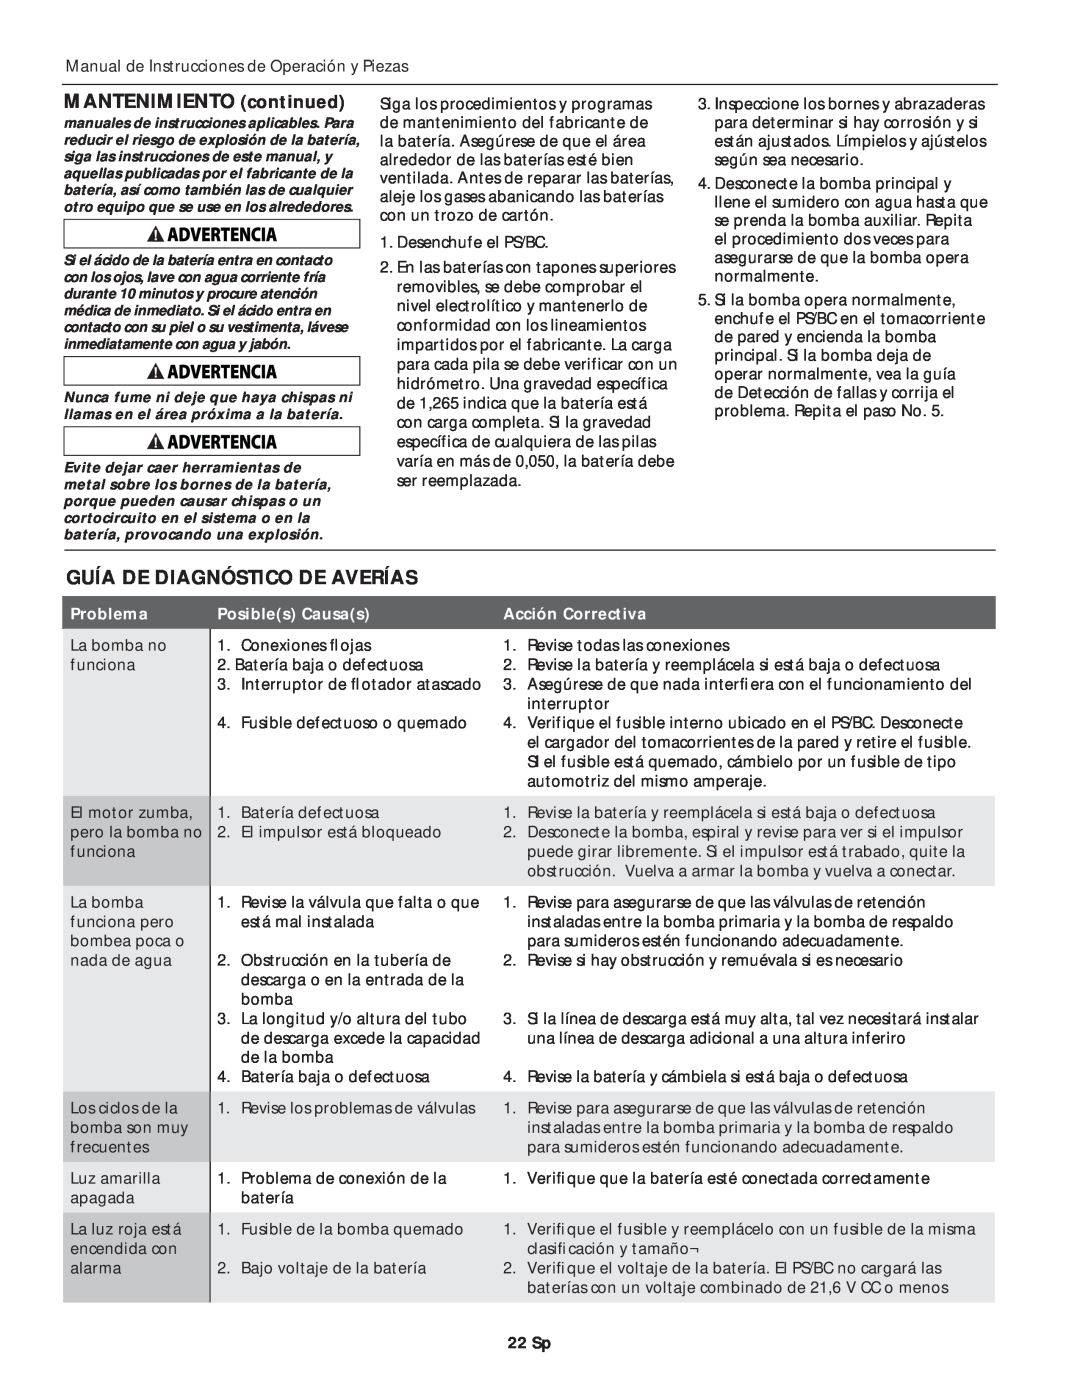 Wayne ESP45 MANTENIMIENTO continued, Guía De Diagnóstico De Averías, Problema, Posibles Causas, Acción Correctiva, 22 Sp 